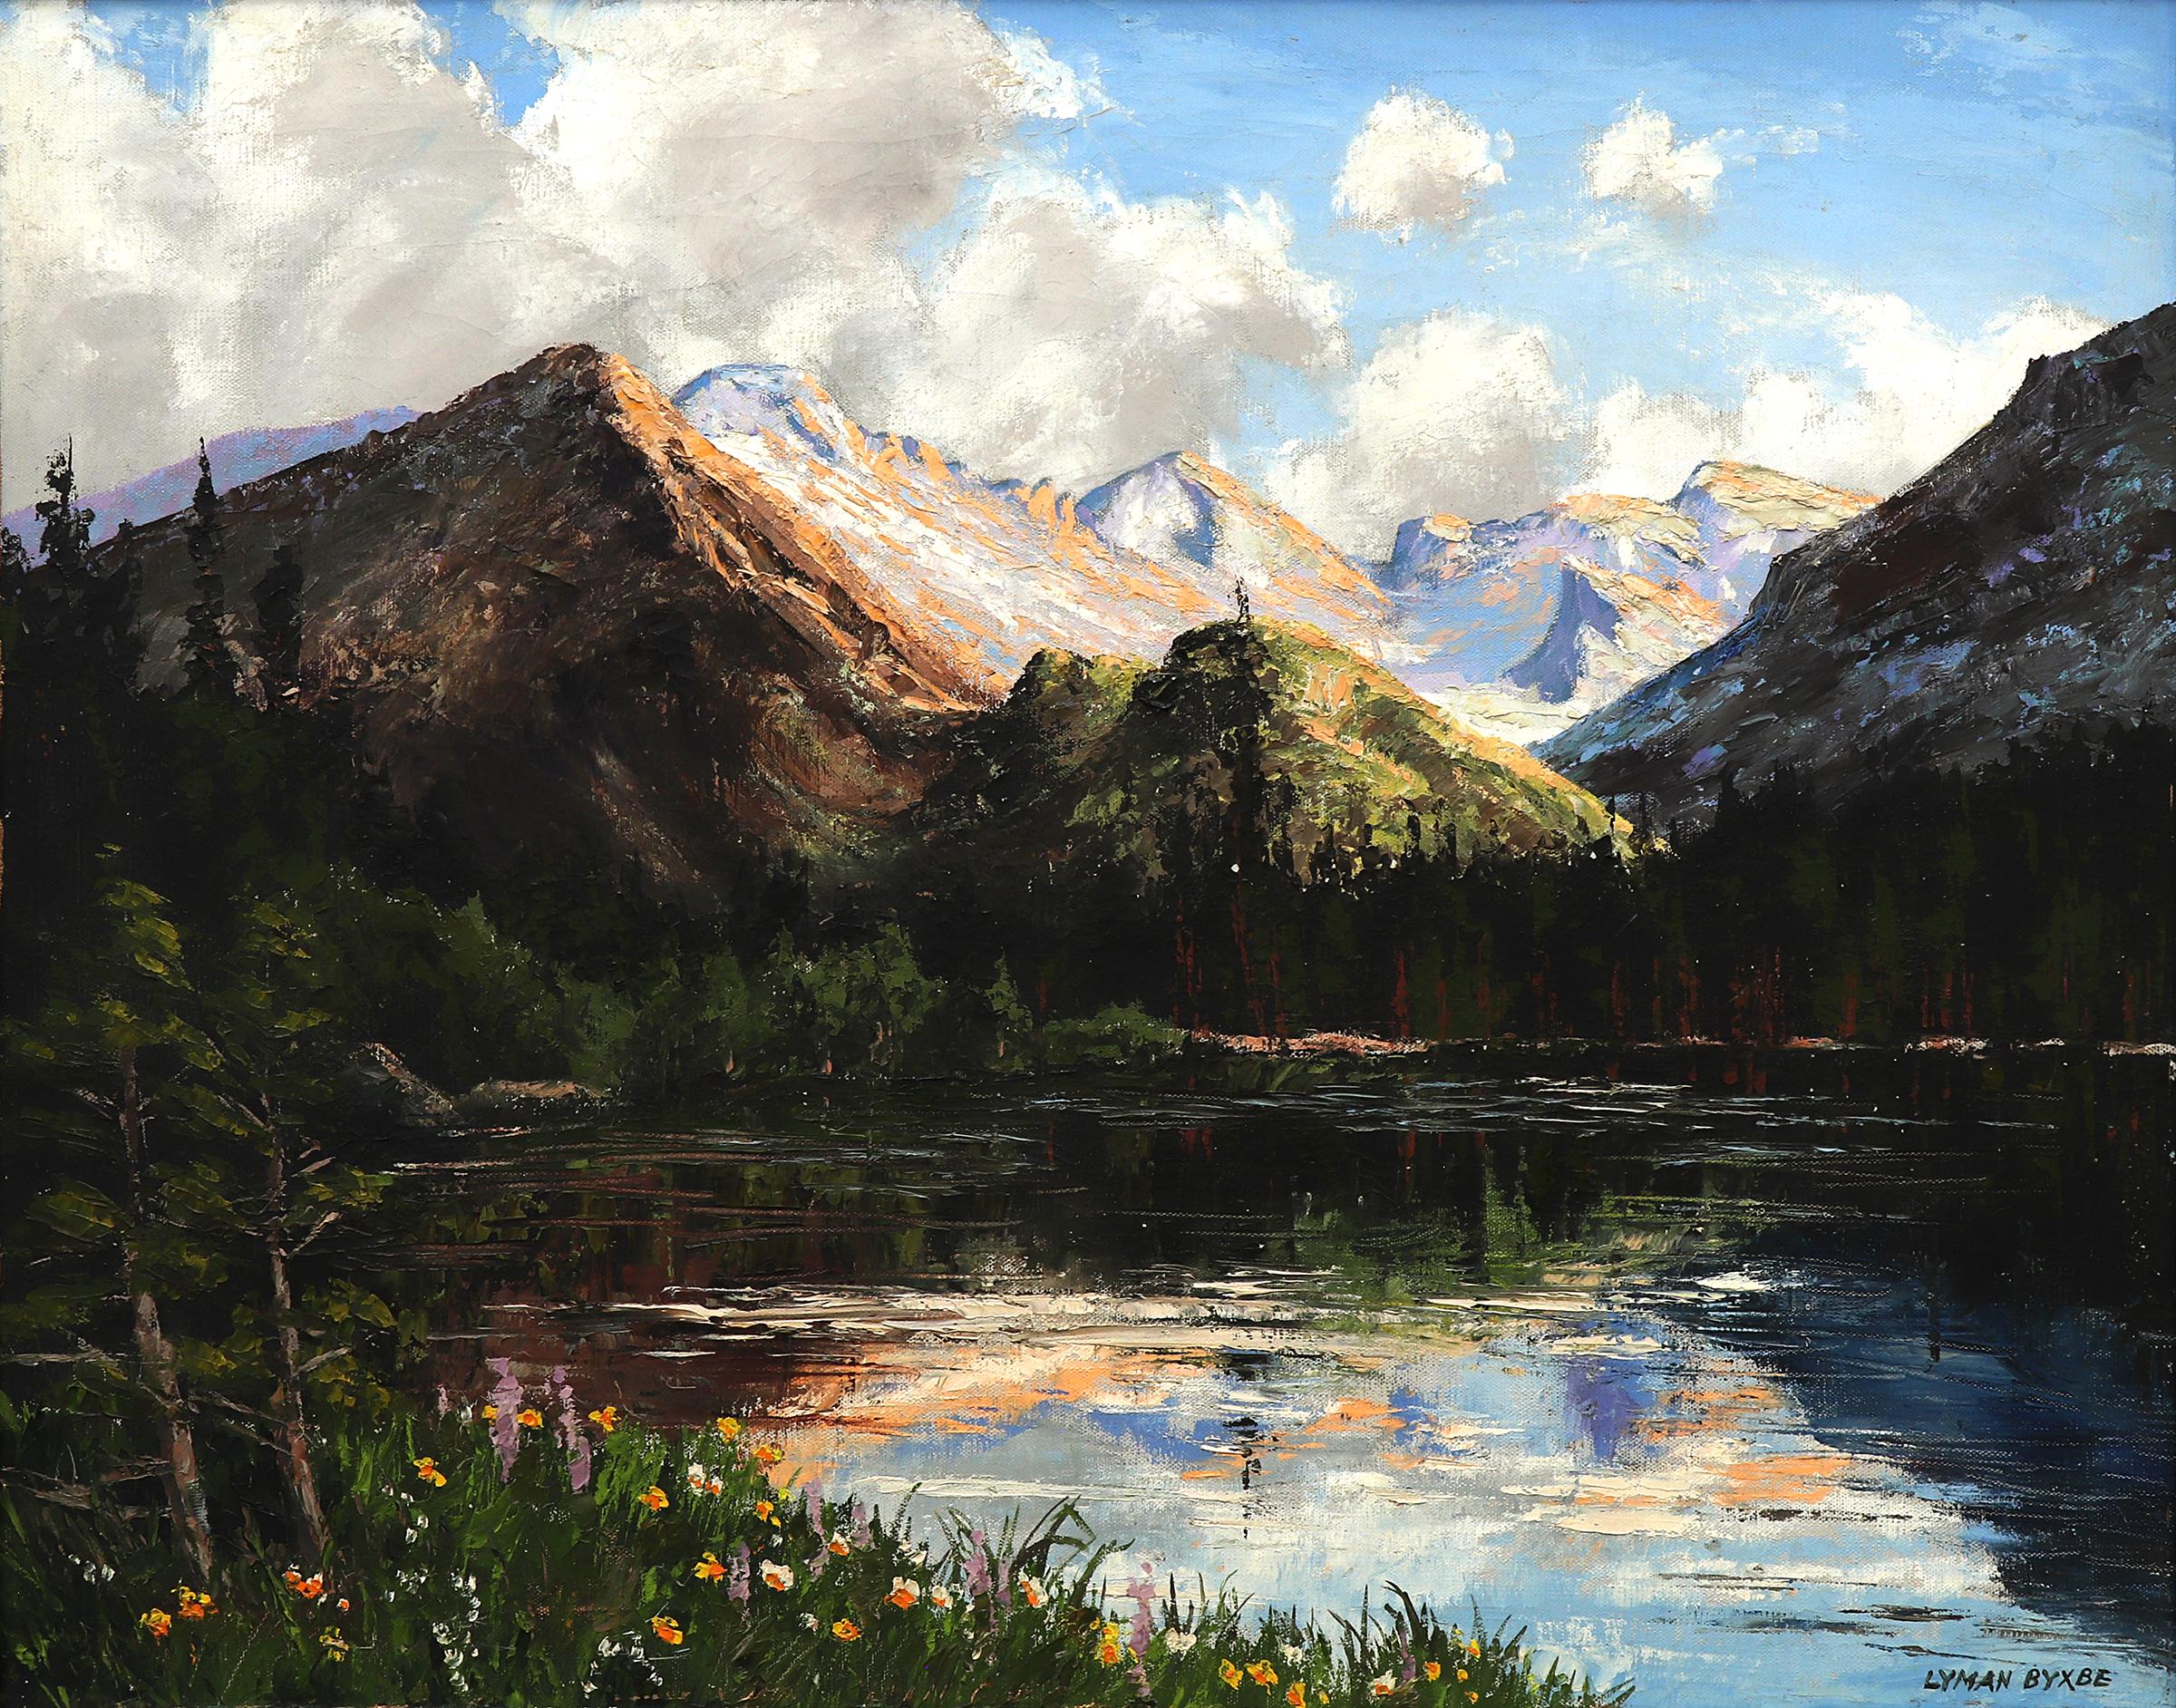 Bear Lake, Colorado, Estes Park, Rocky Mountain National Park, Vintage Landscape - Painting by Lyman Byxbe